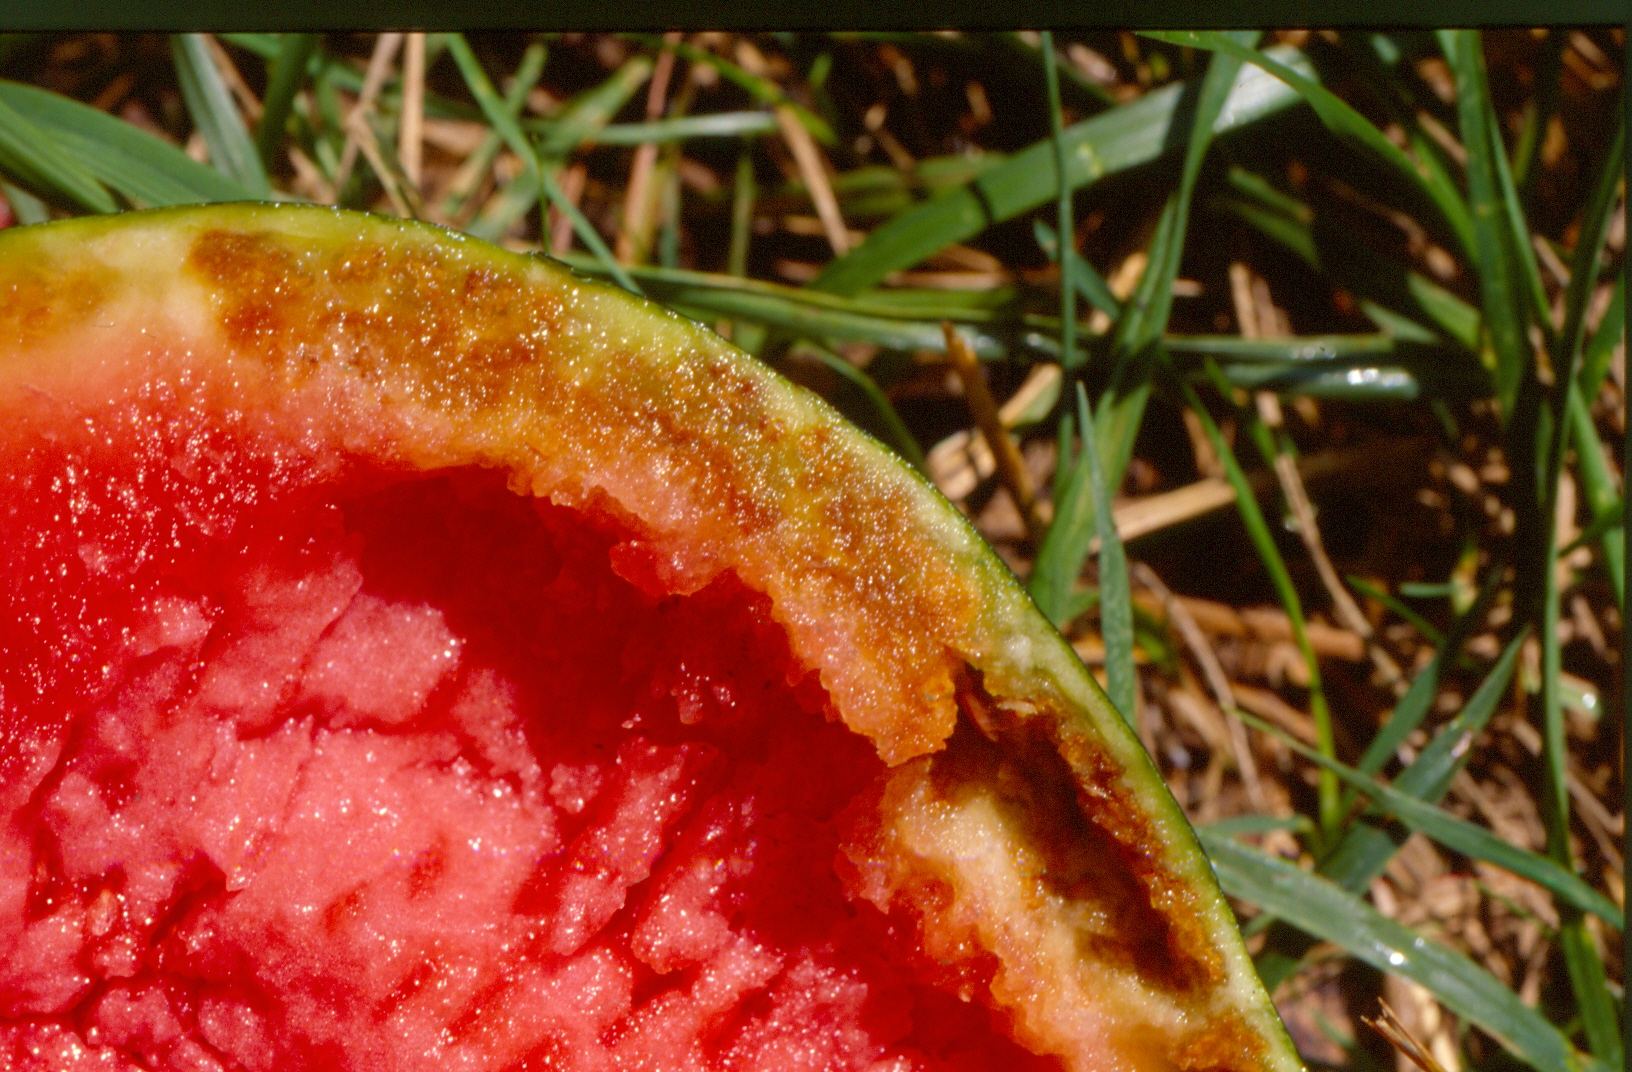 Figure 4. Severe rind necrosis of watermelon